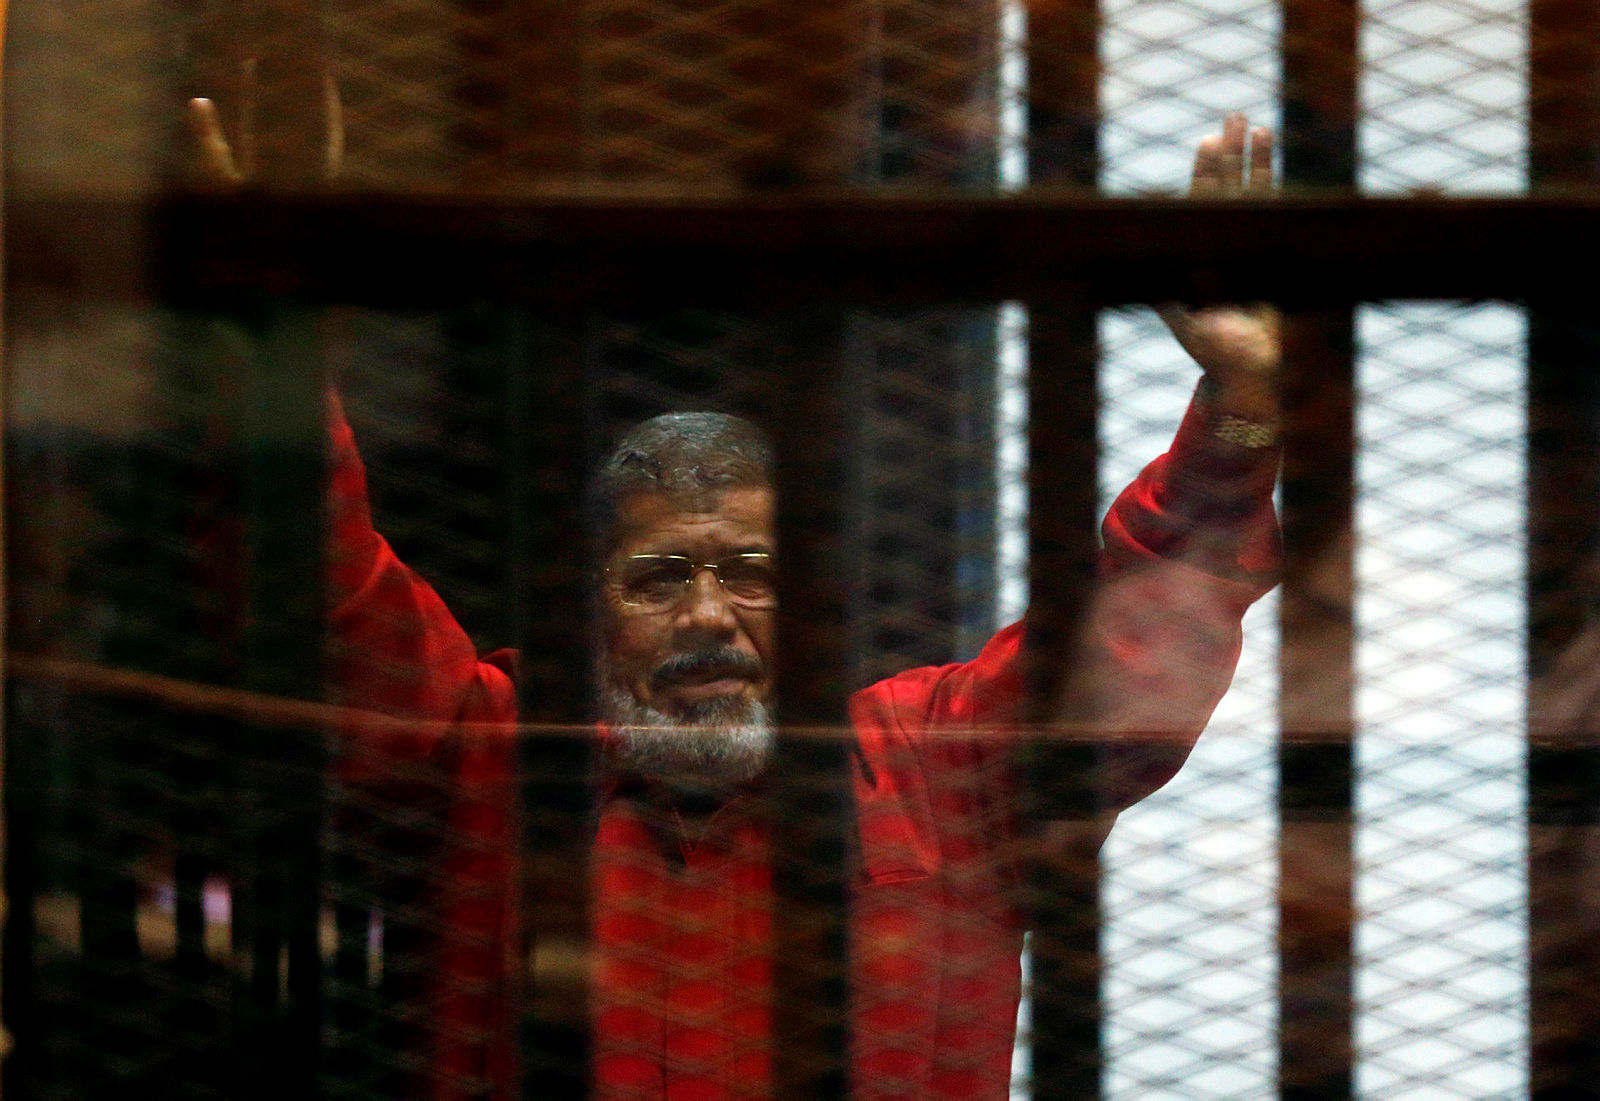 İhvan: Mursi kasten öldürülmüştür